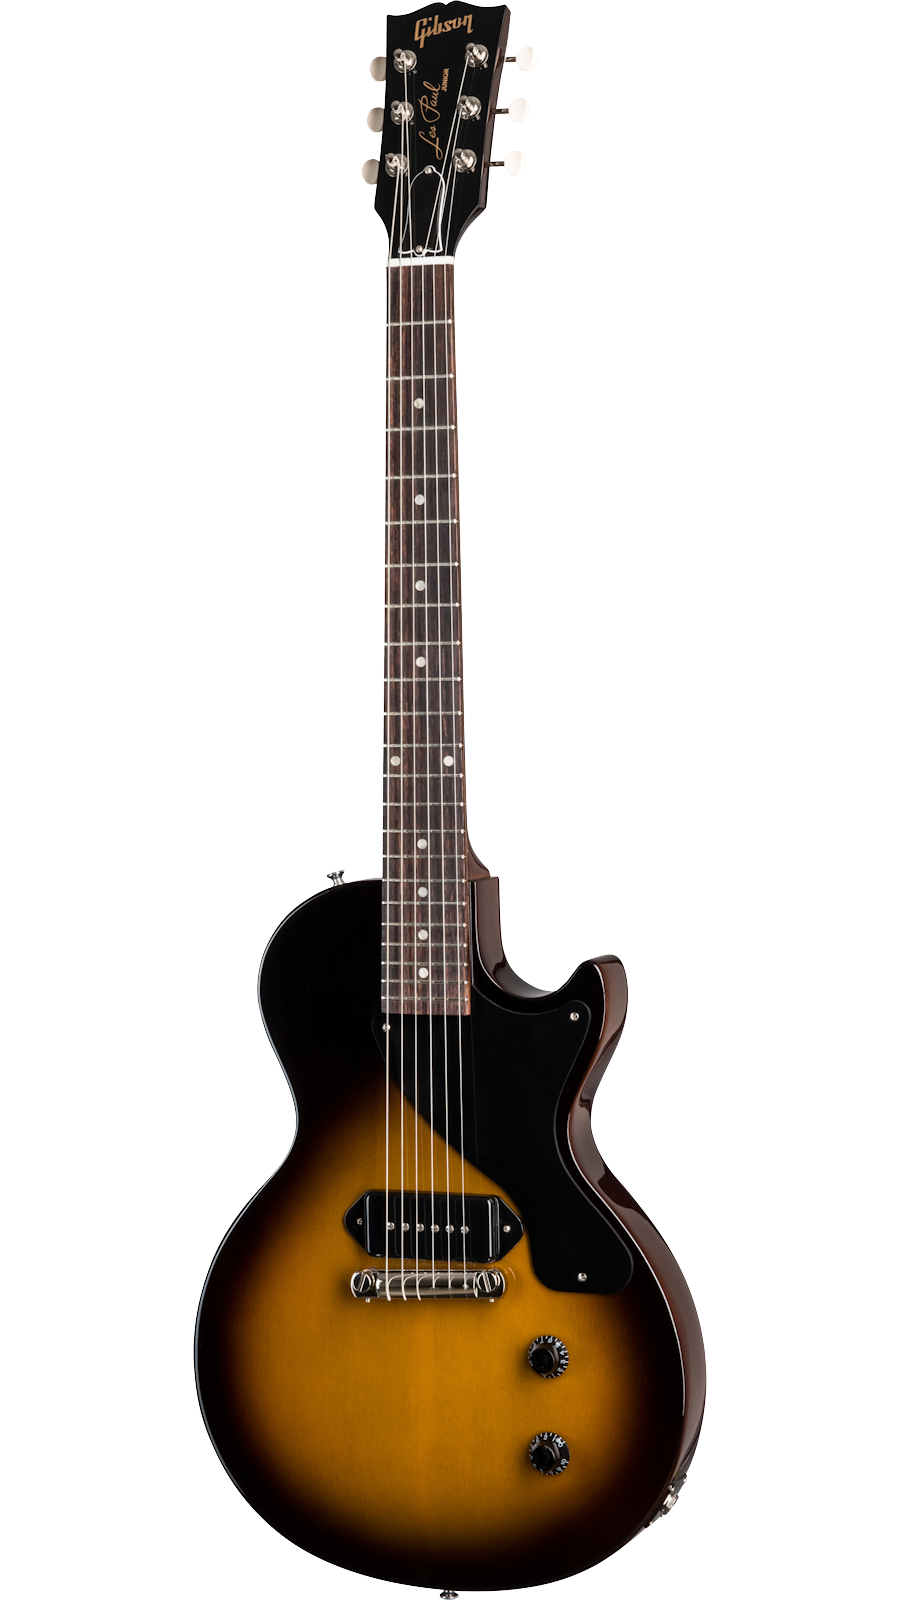 Gibson Les Paul Junior electric guitar in Vintage Tobacco Burst color Tone Shop Guitars DFW